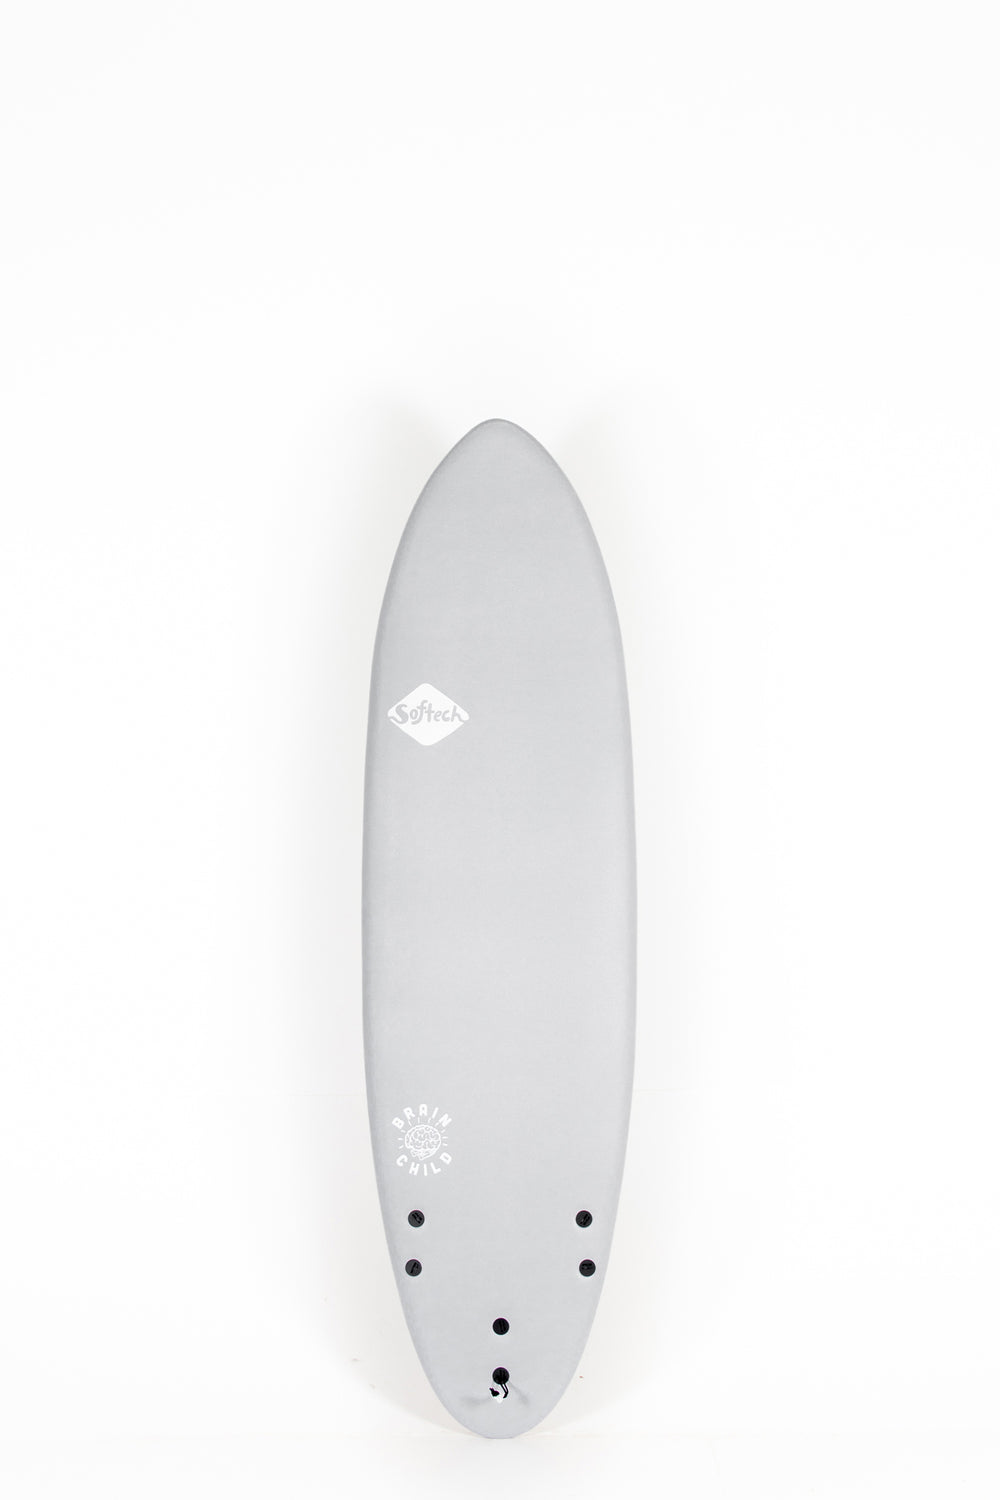 Pukas Surf Shop - SOFTECH - BRAINCHILD 6''6